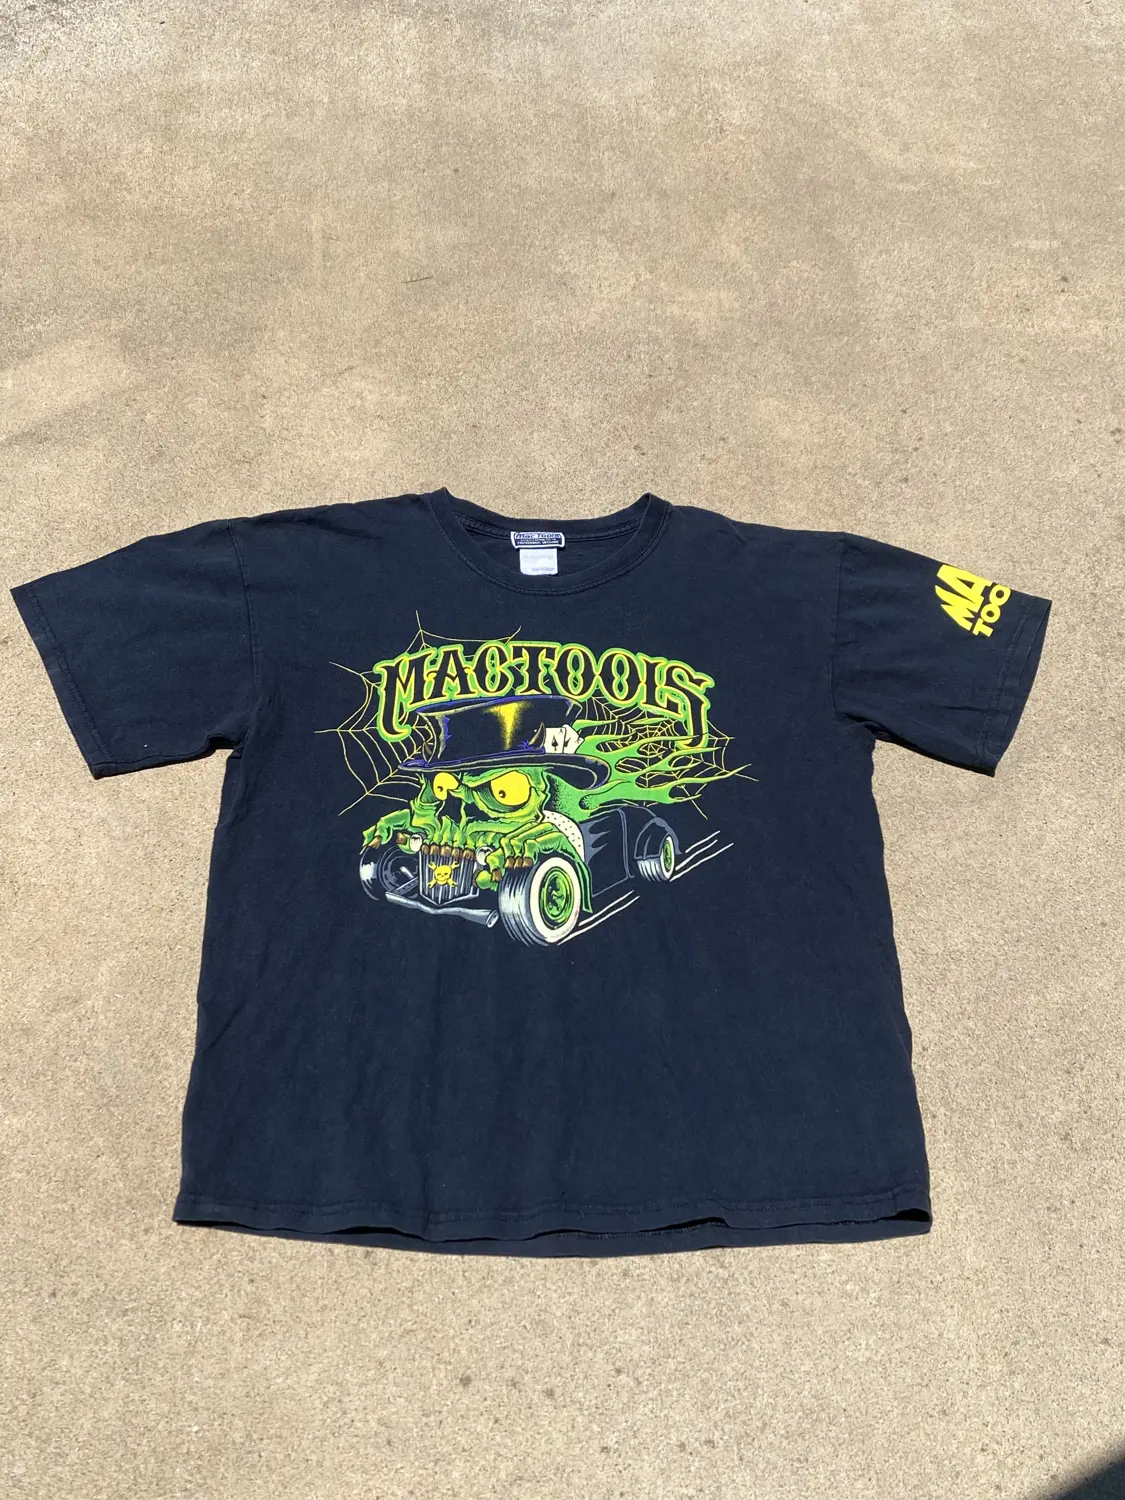 Vintage Mac Tools Racing tshirt